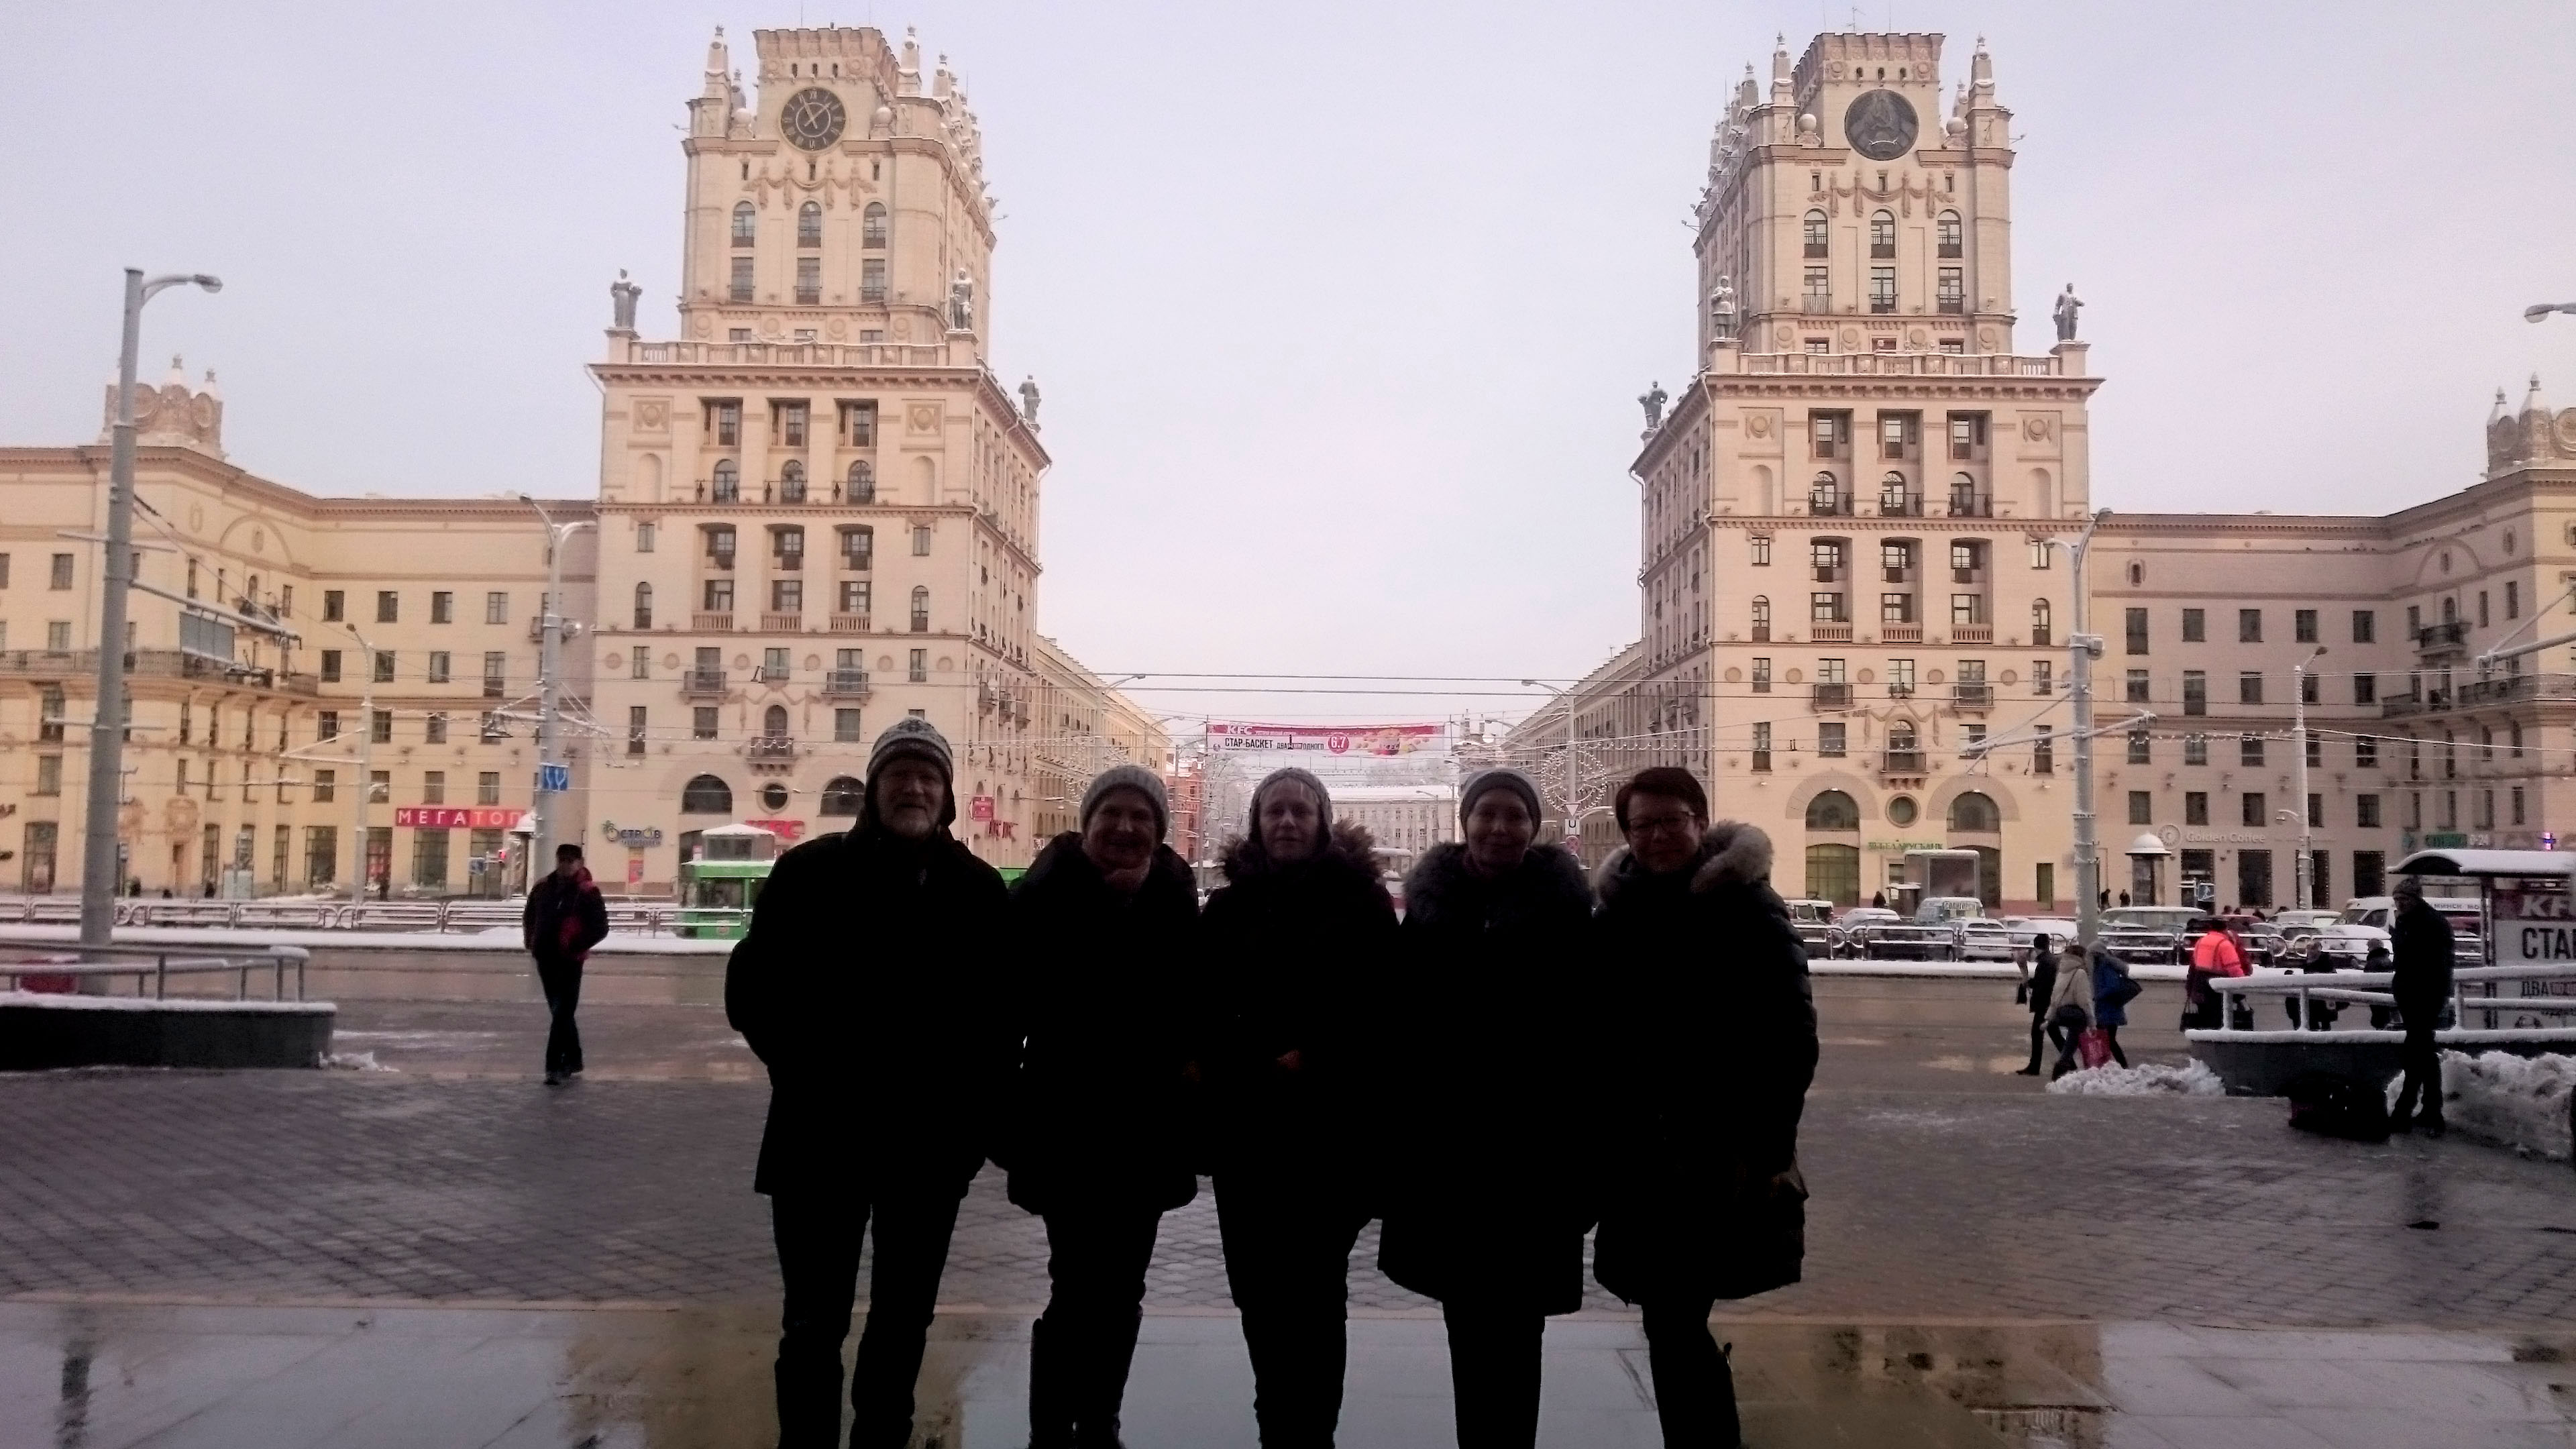 На фоне визитной карточки города - Ворота Минска